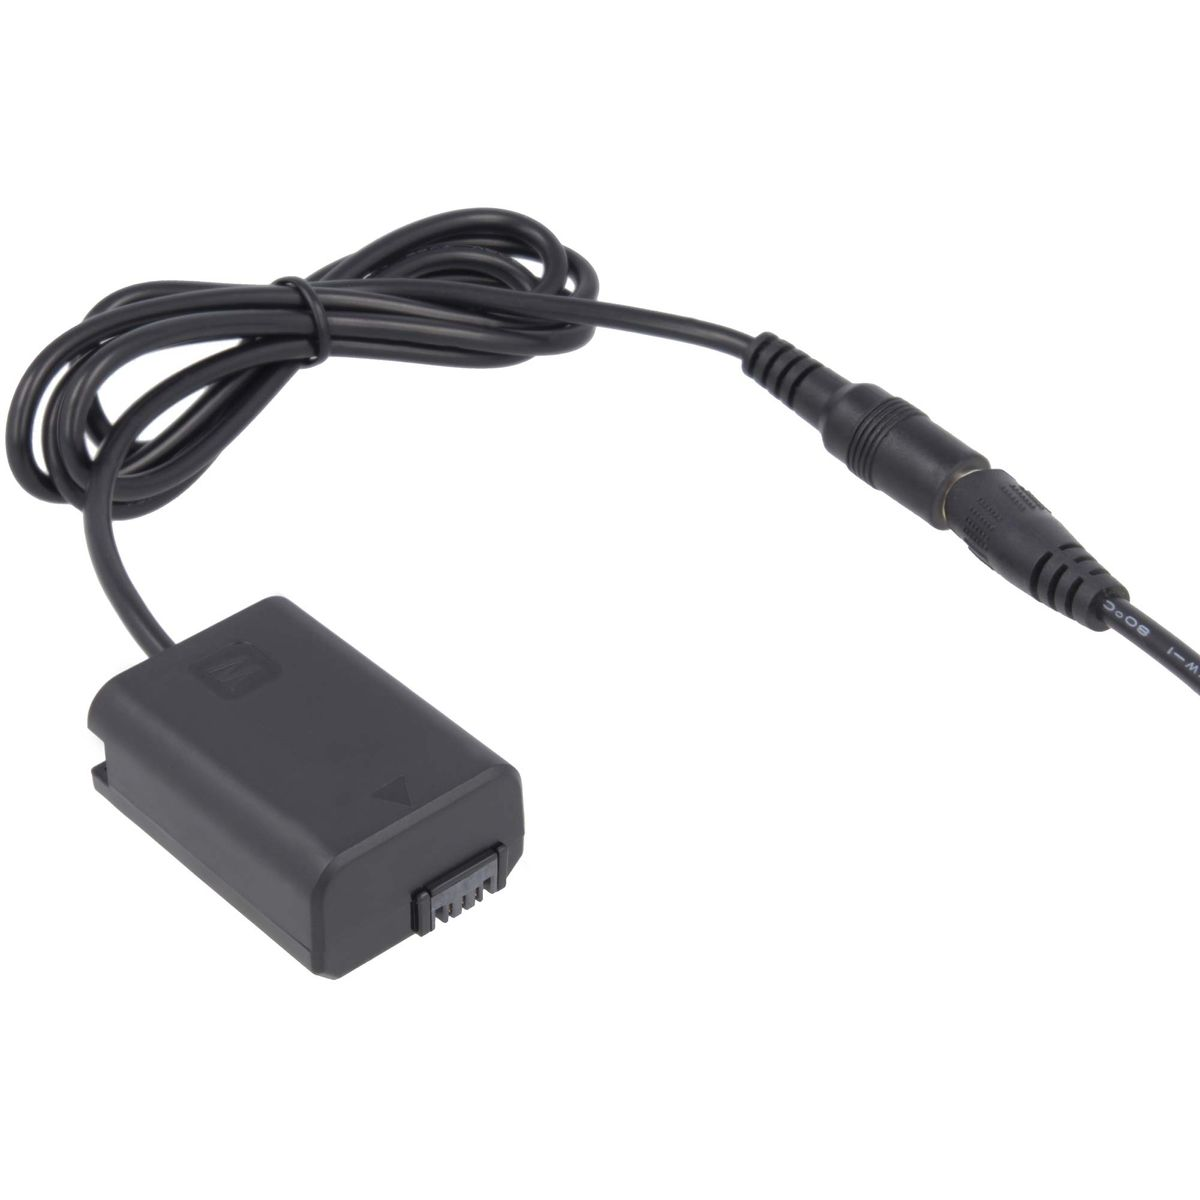 AKKU-KING + Sony AC-PW20 Sony, Angabe USB-C keine Ladegerät Kuppler kompatibel Adapter mit